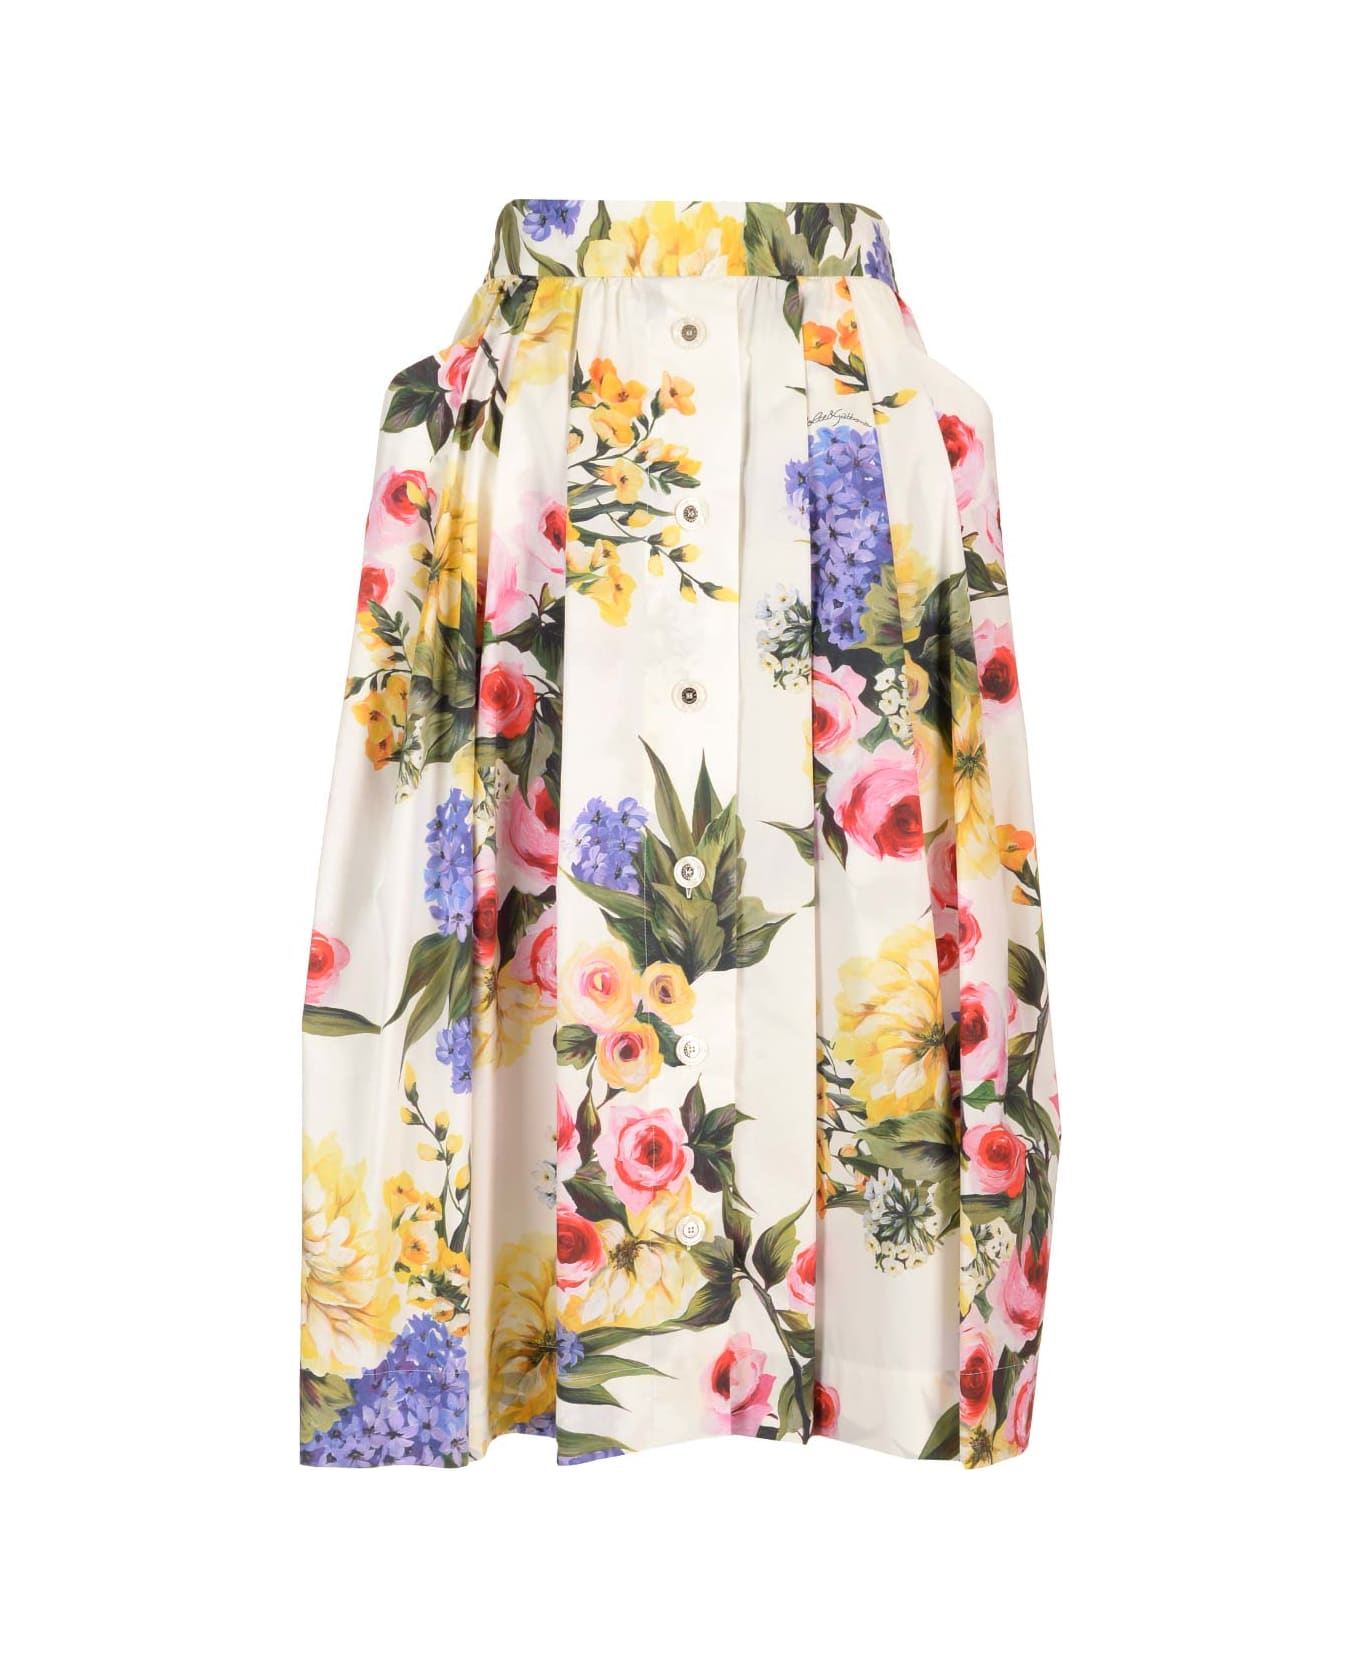 Dolce & Gabbana Floral Print Skirt - Multicolor